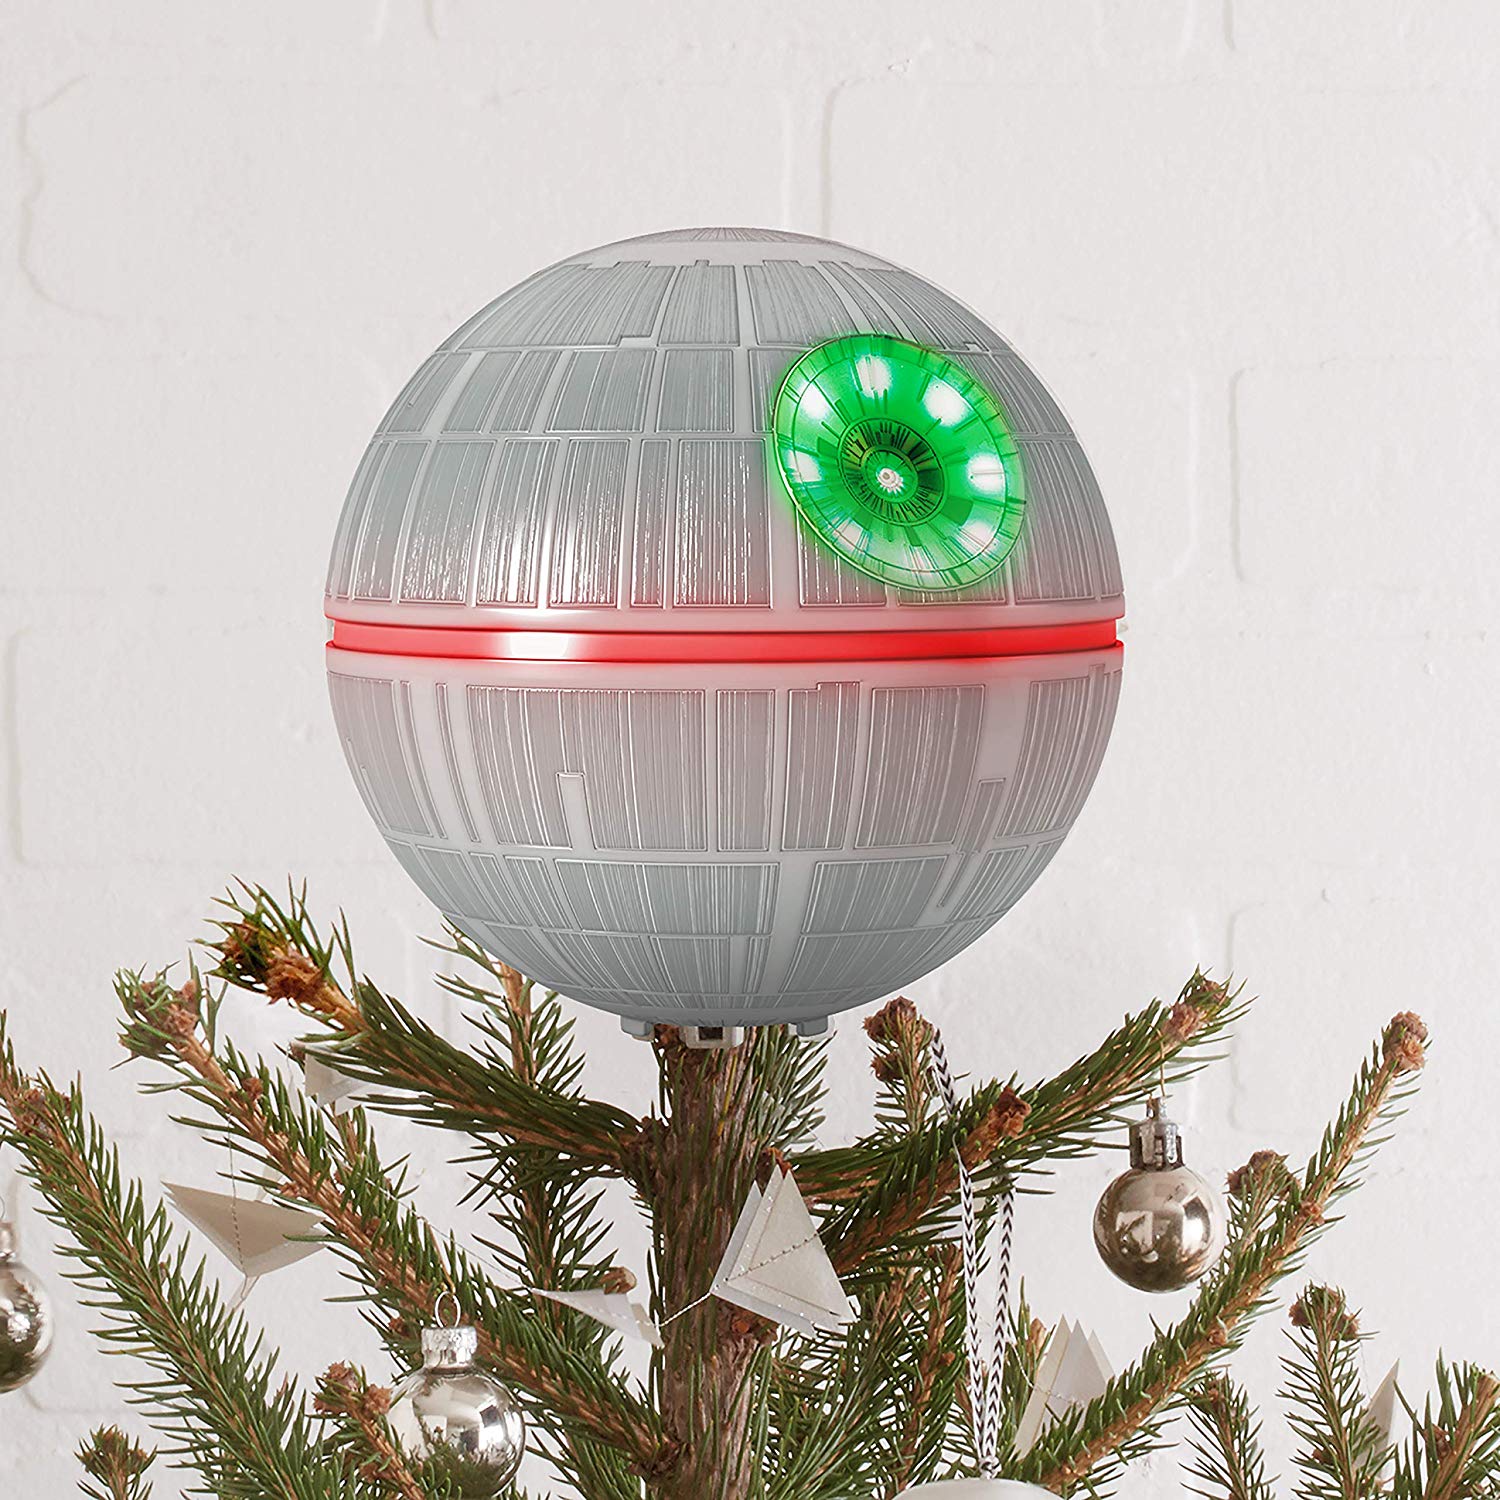 https://walyou.com/wp-content/uploads//2019/12/Hallmark-Keepsake-Christmas-Ornament-Death-Star-Tree-Topper.jpg